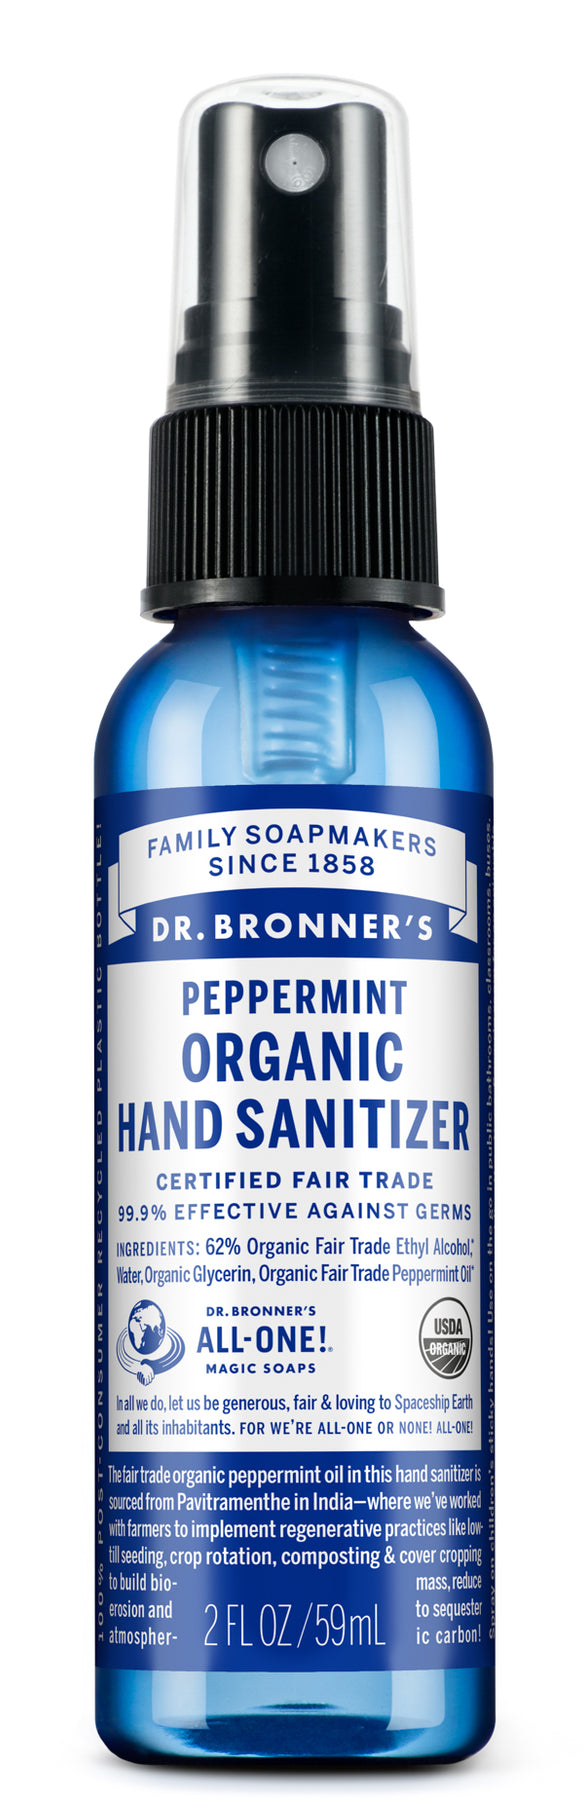 Unscented Hand Sanitizer Gel and Spray